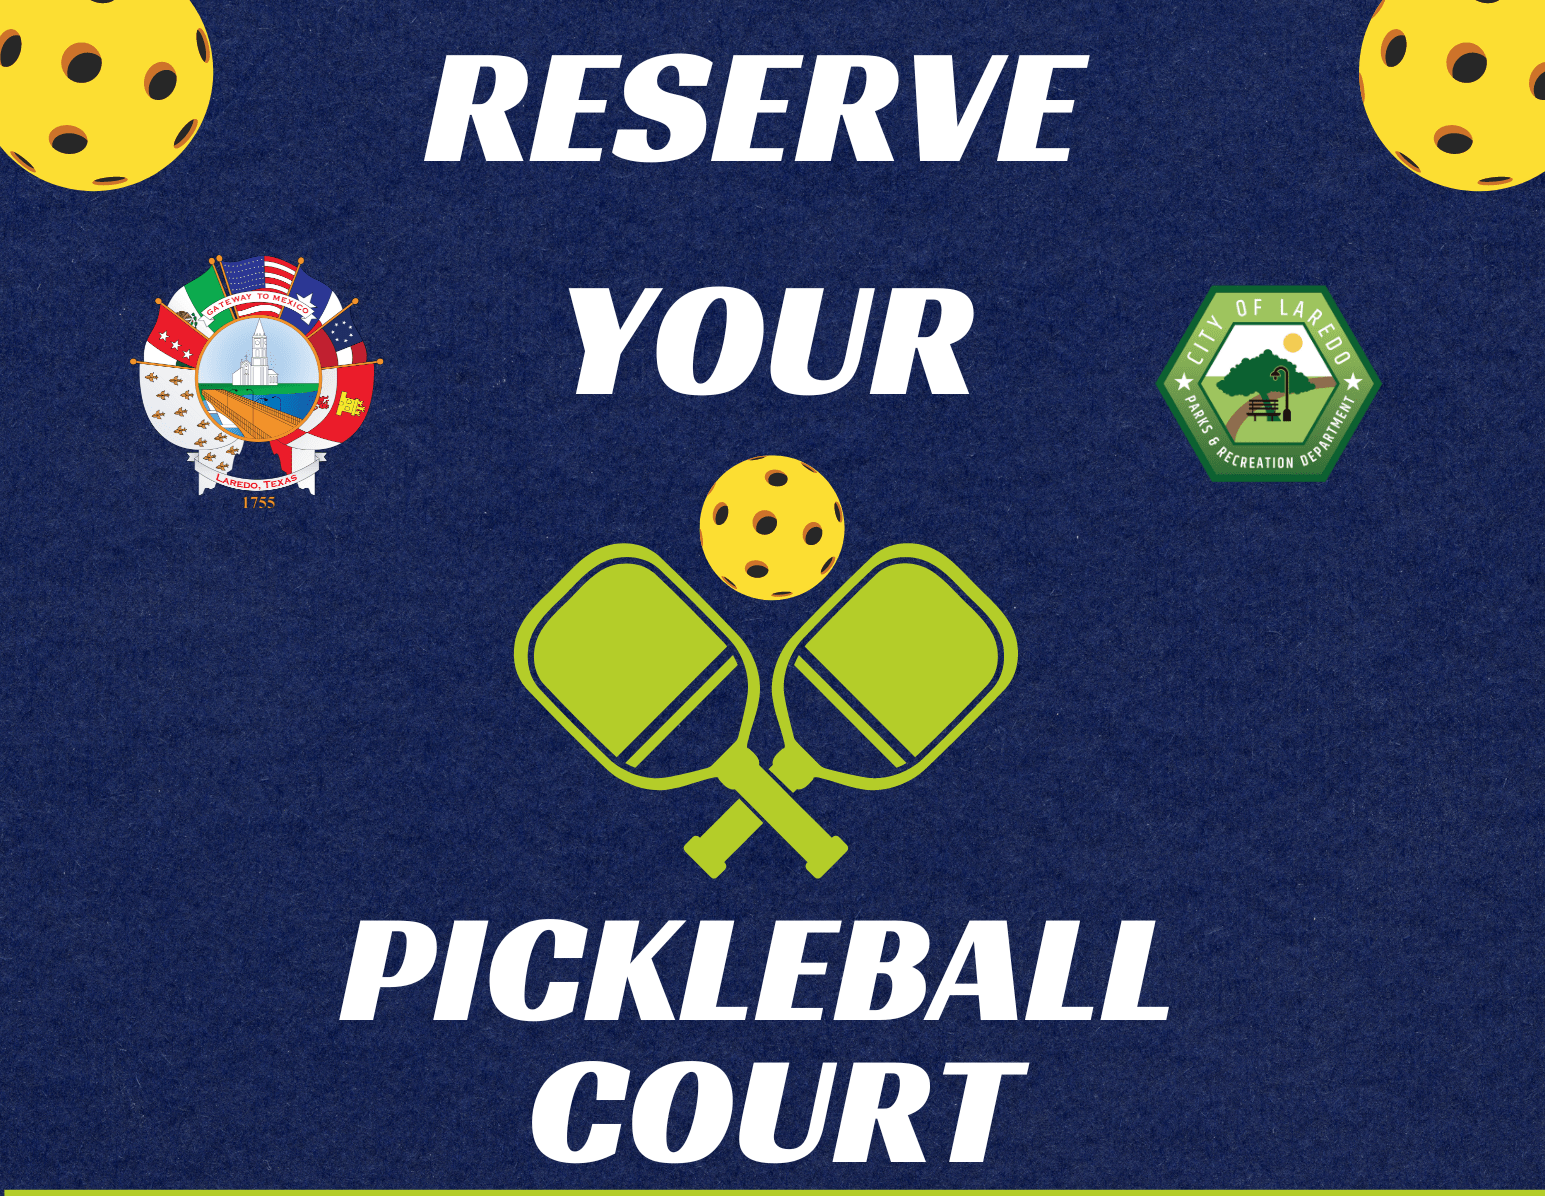 Pickelball Reservation Flyer (3)